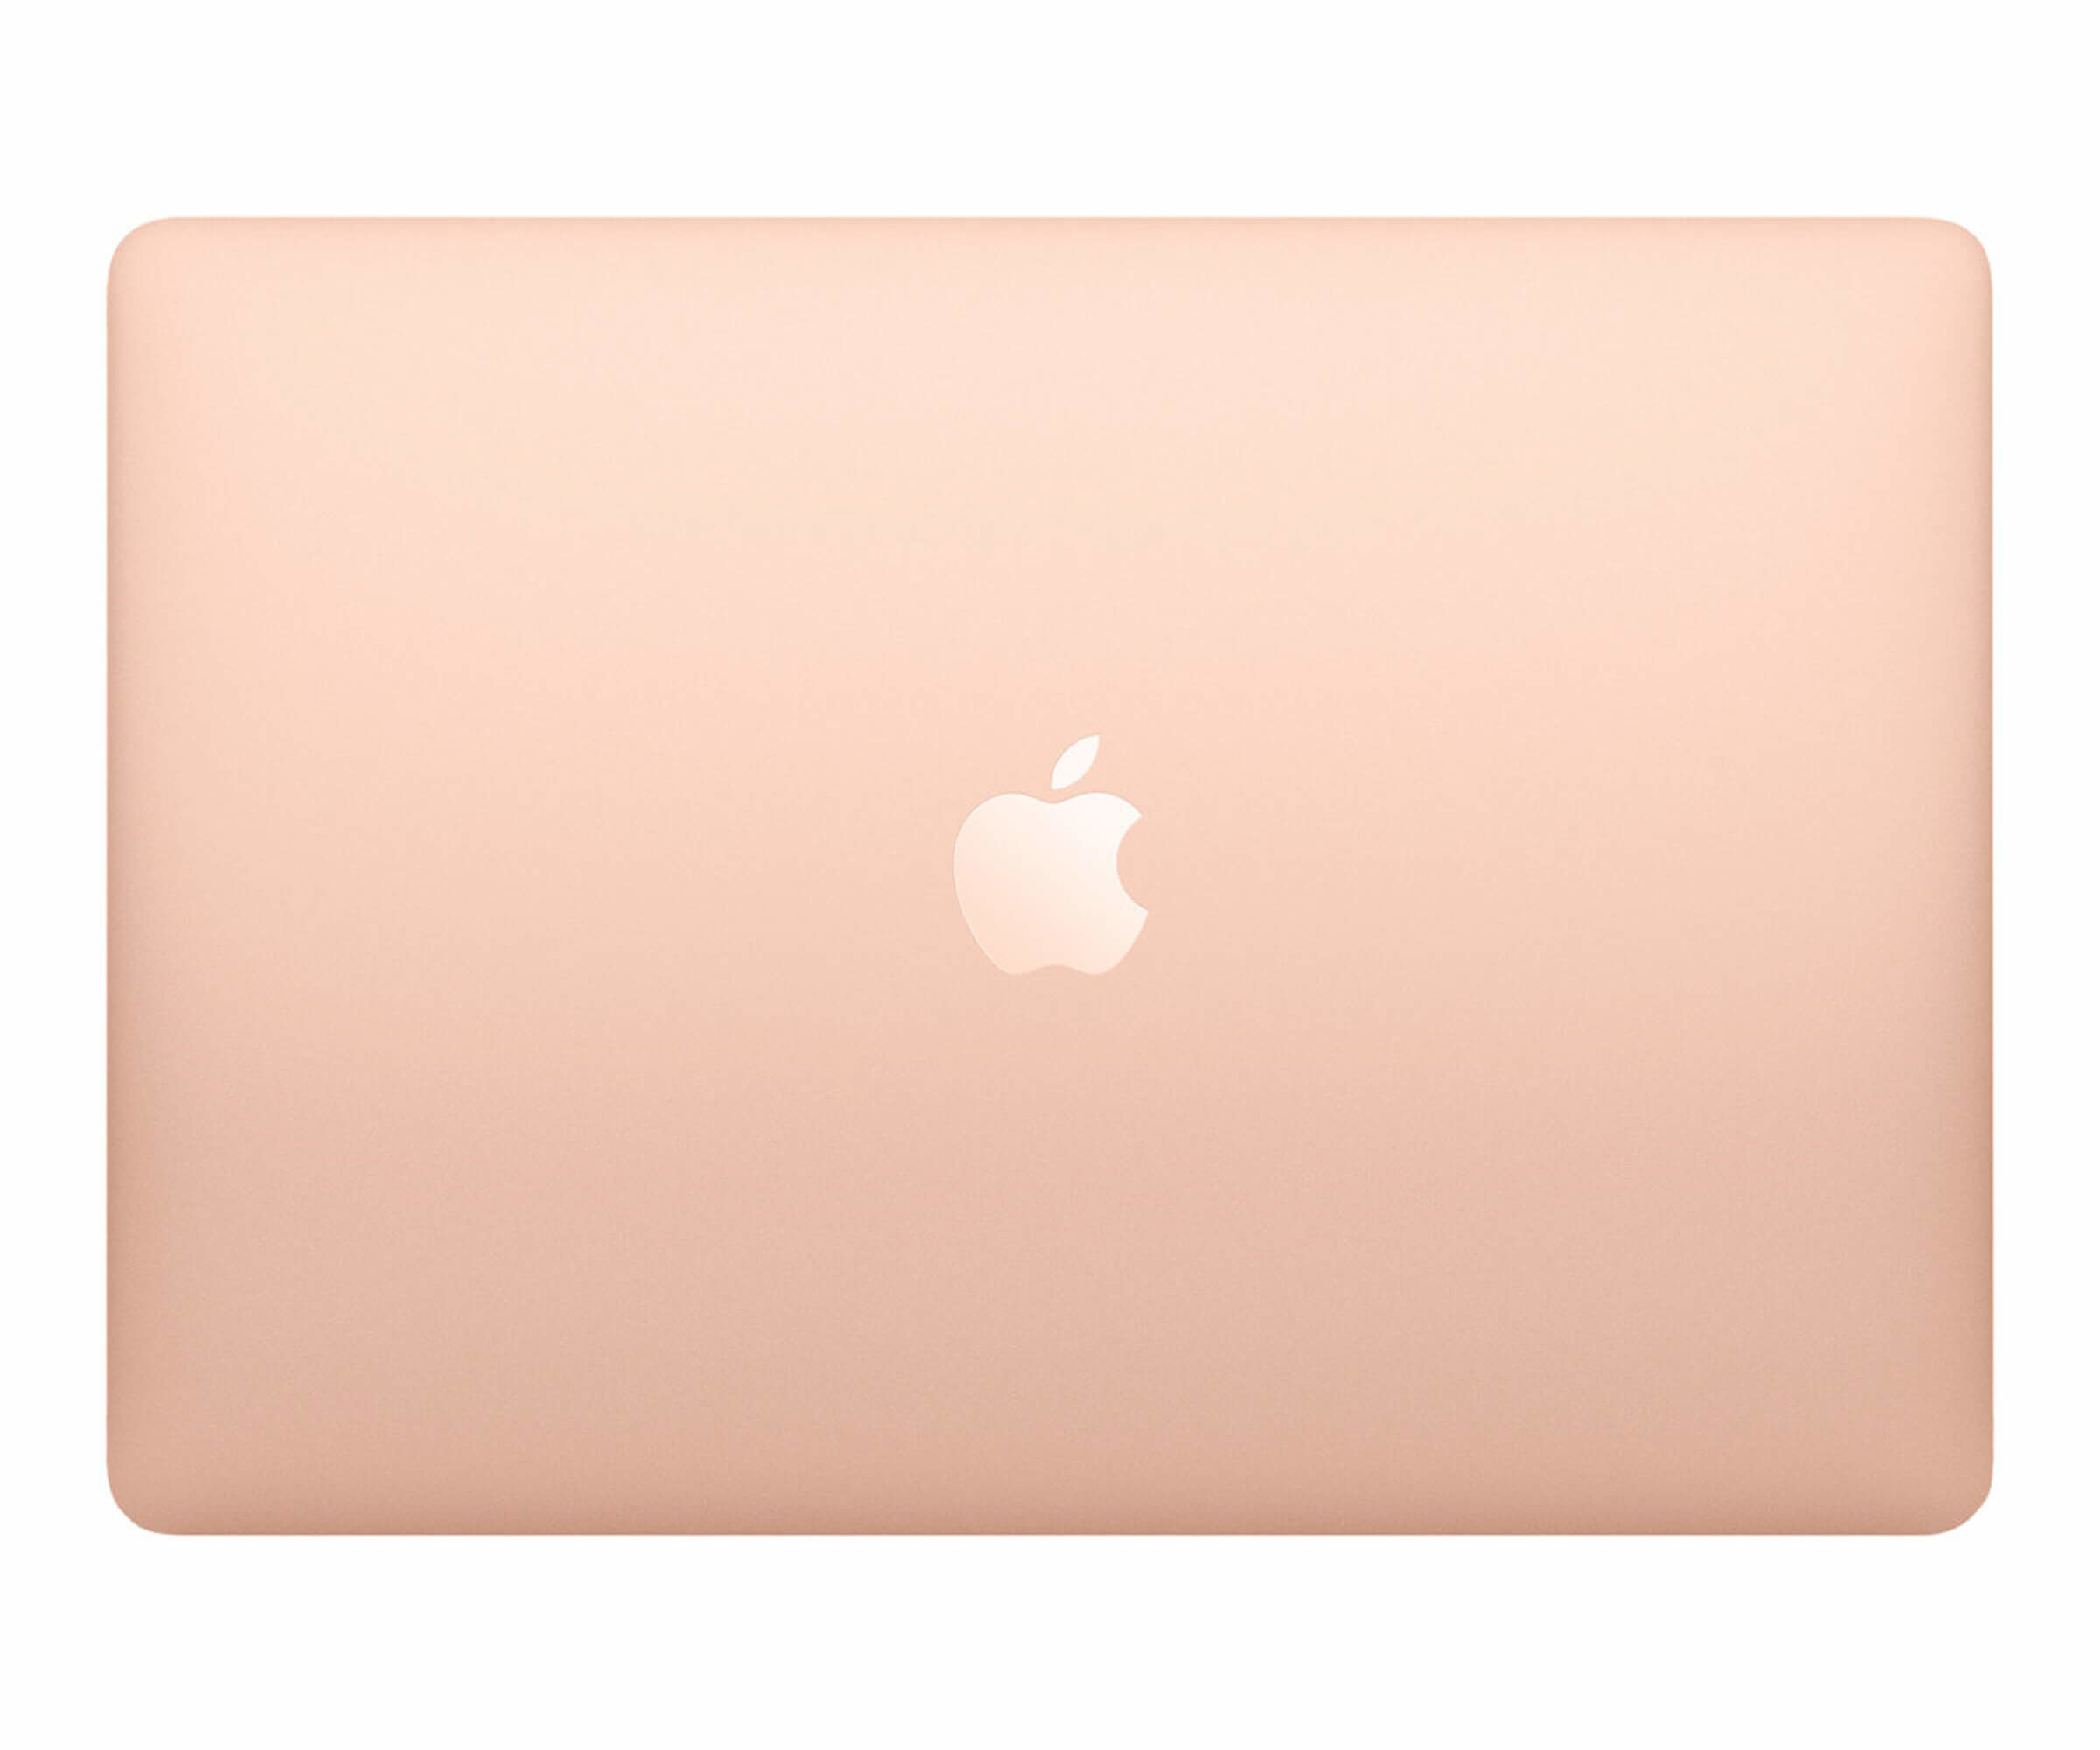 Apple MacBook Air with Retina display - Core i5 1.6 GHz - Apple macOS Mojave 10.14 - 8 GB RAM - 128 GB SSD - 33.8 cm (13.3